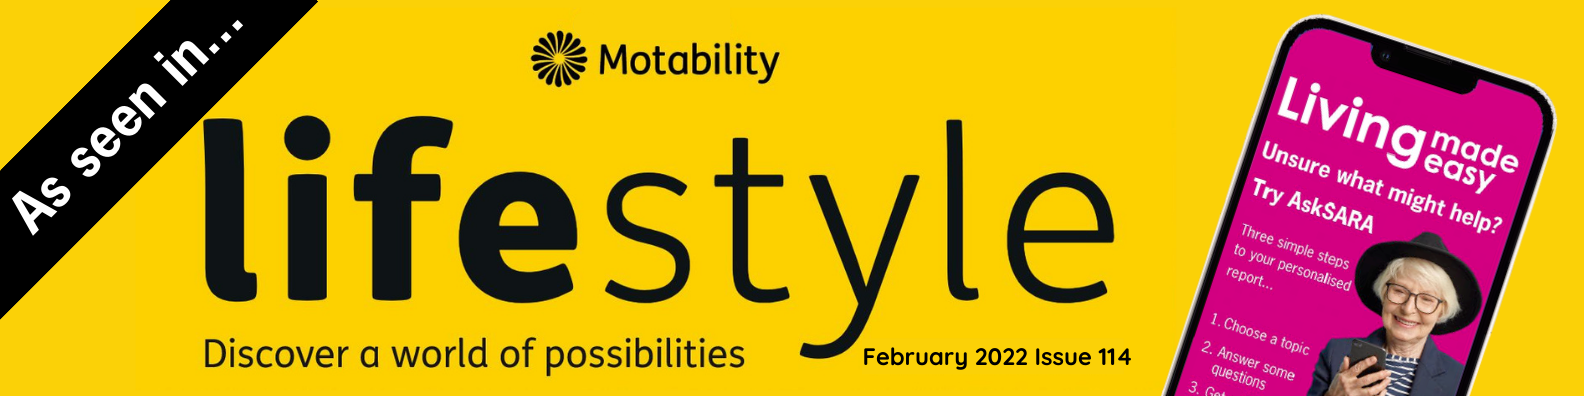 Motability Lifestyle Magazine masthead with mobile phone app representation of AskSARA